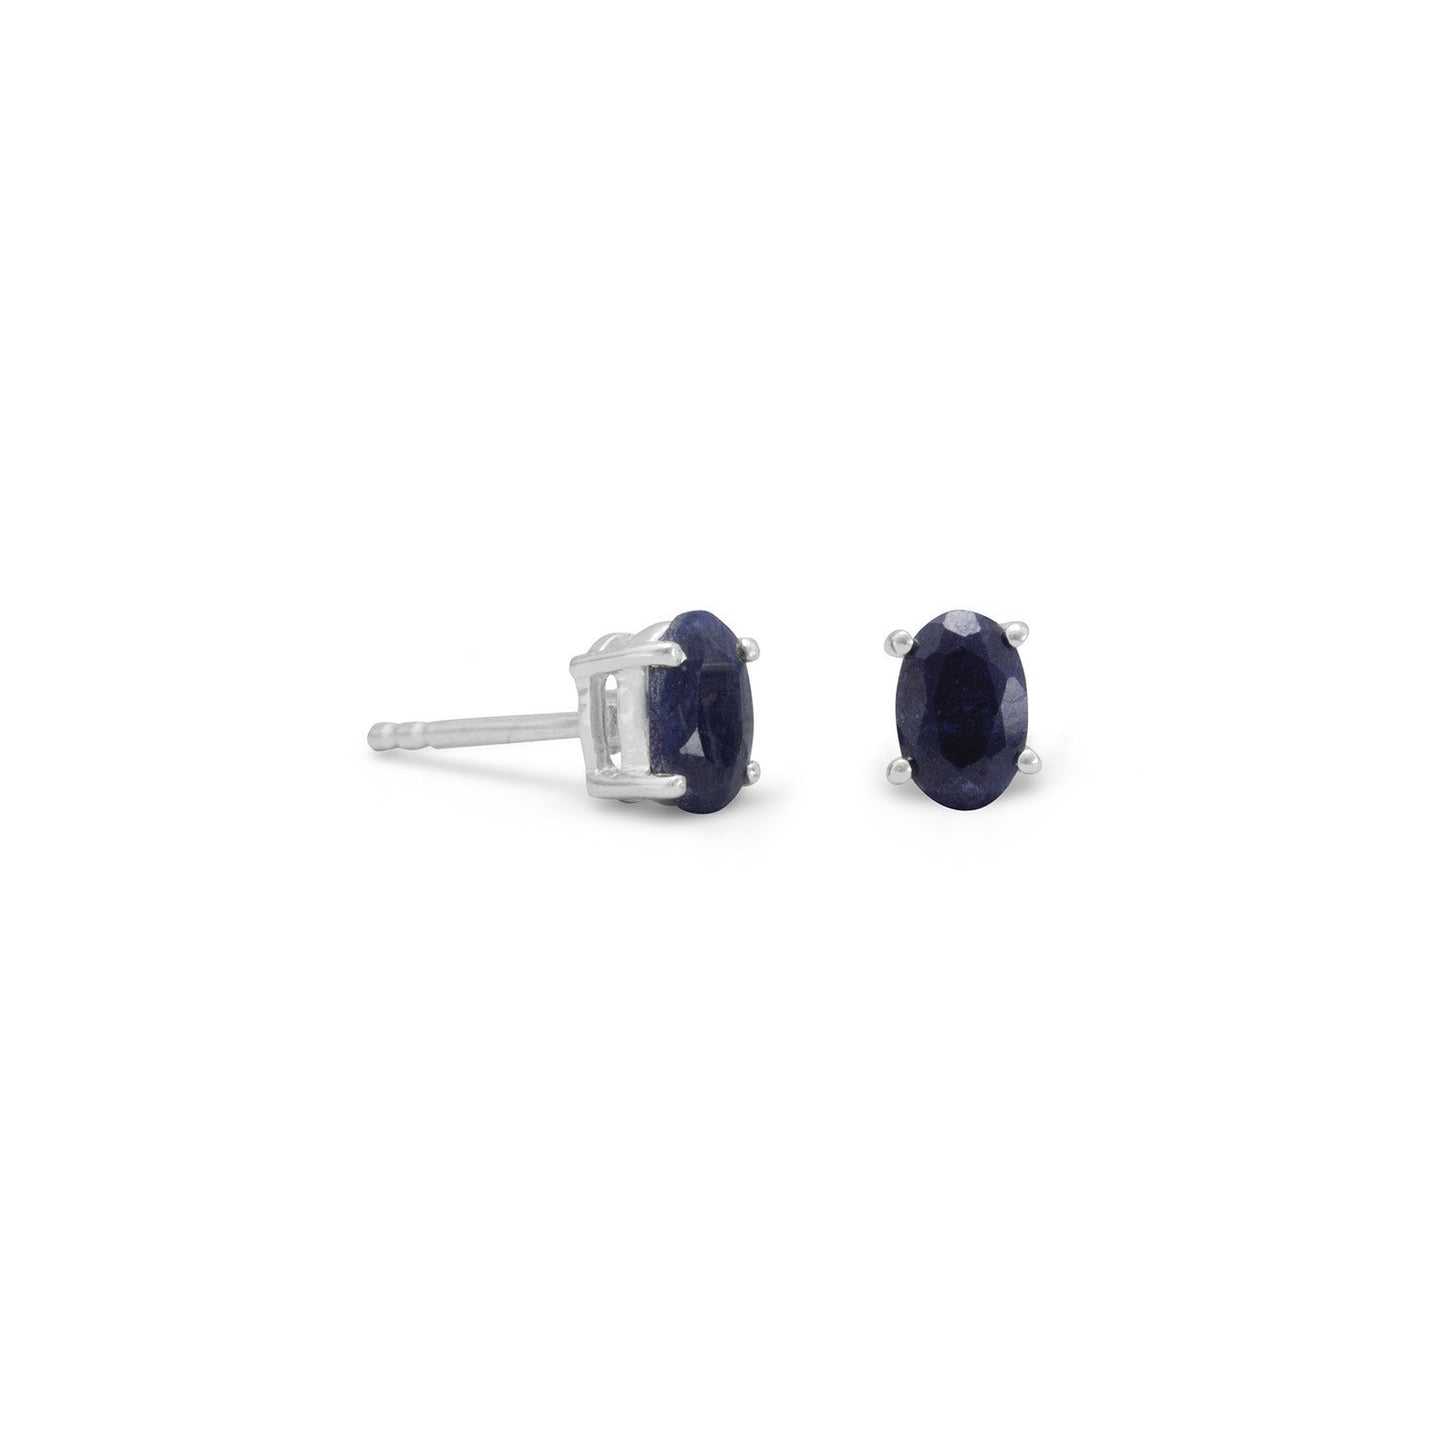 Faceted Oval Corundum Earrings - SoMag2